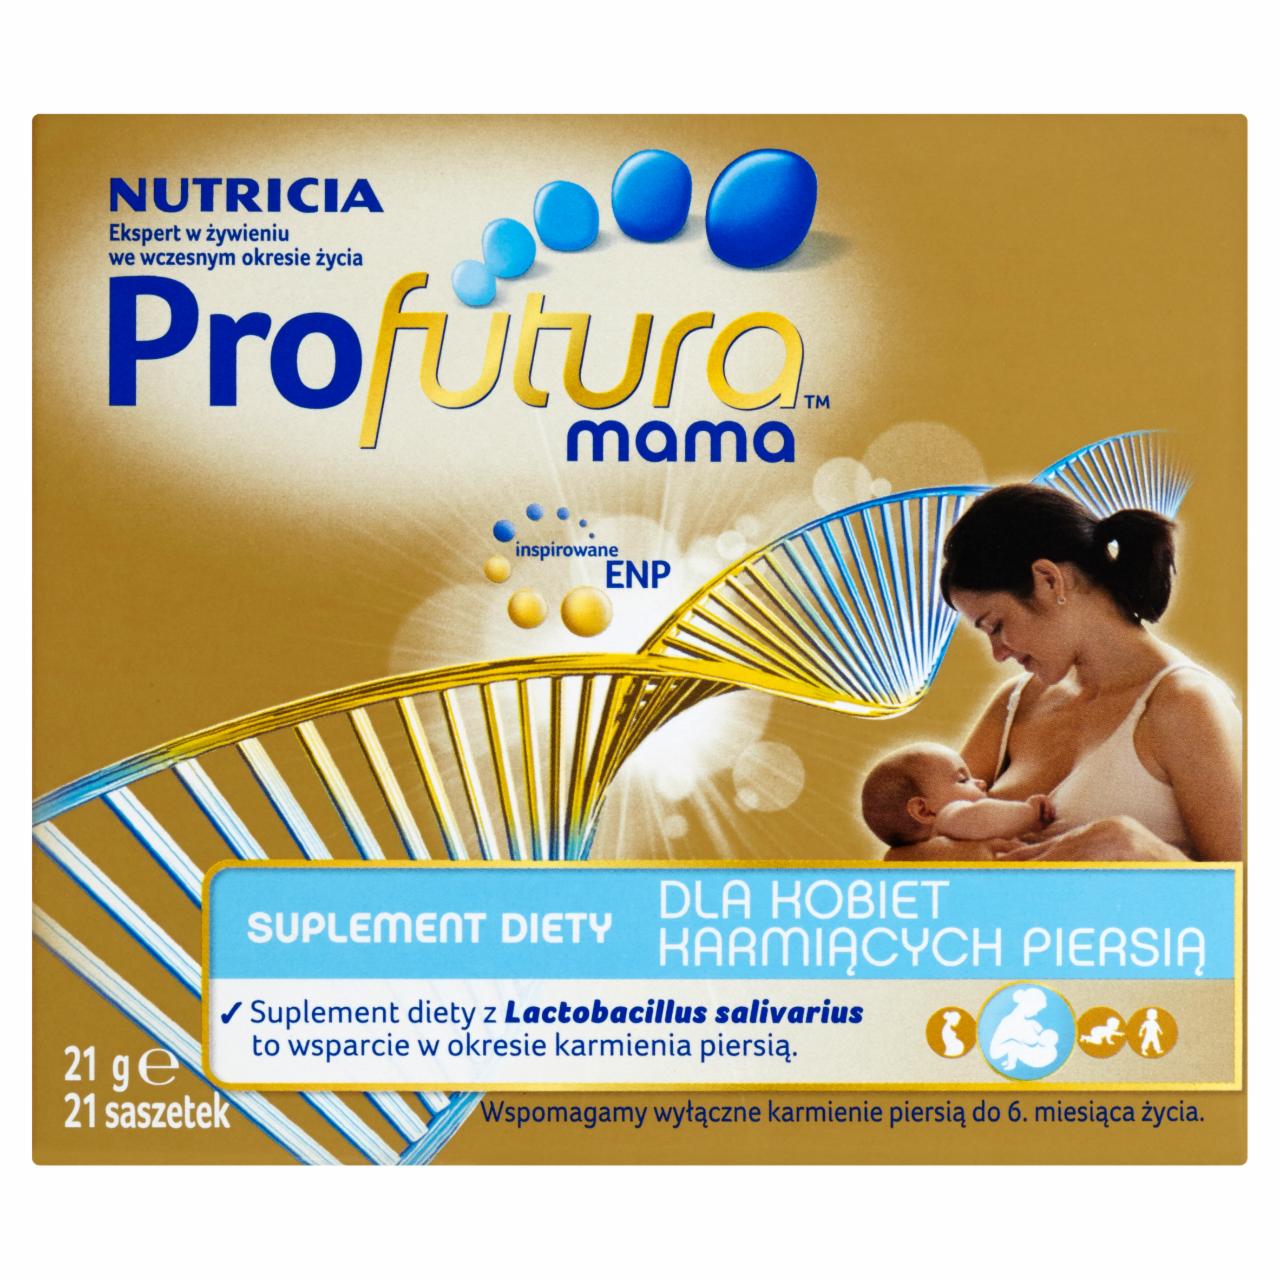 Photo - Nutricia Profutura Mama Dietary Supplement for Breastfeeding Women 21 g (21 Sachets)